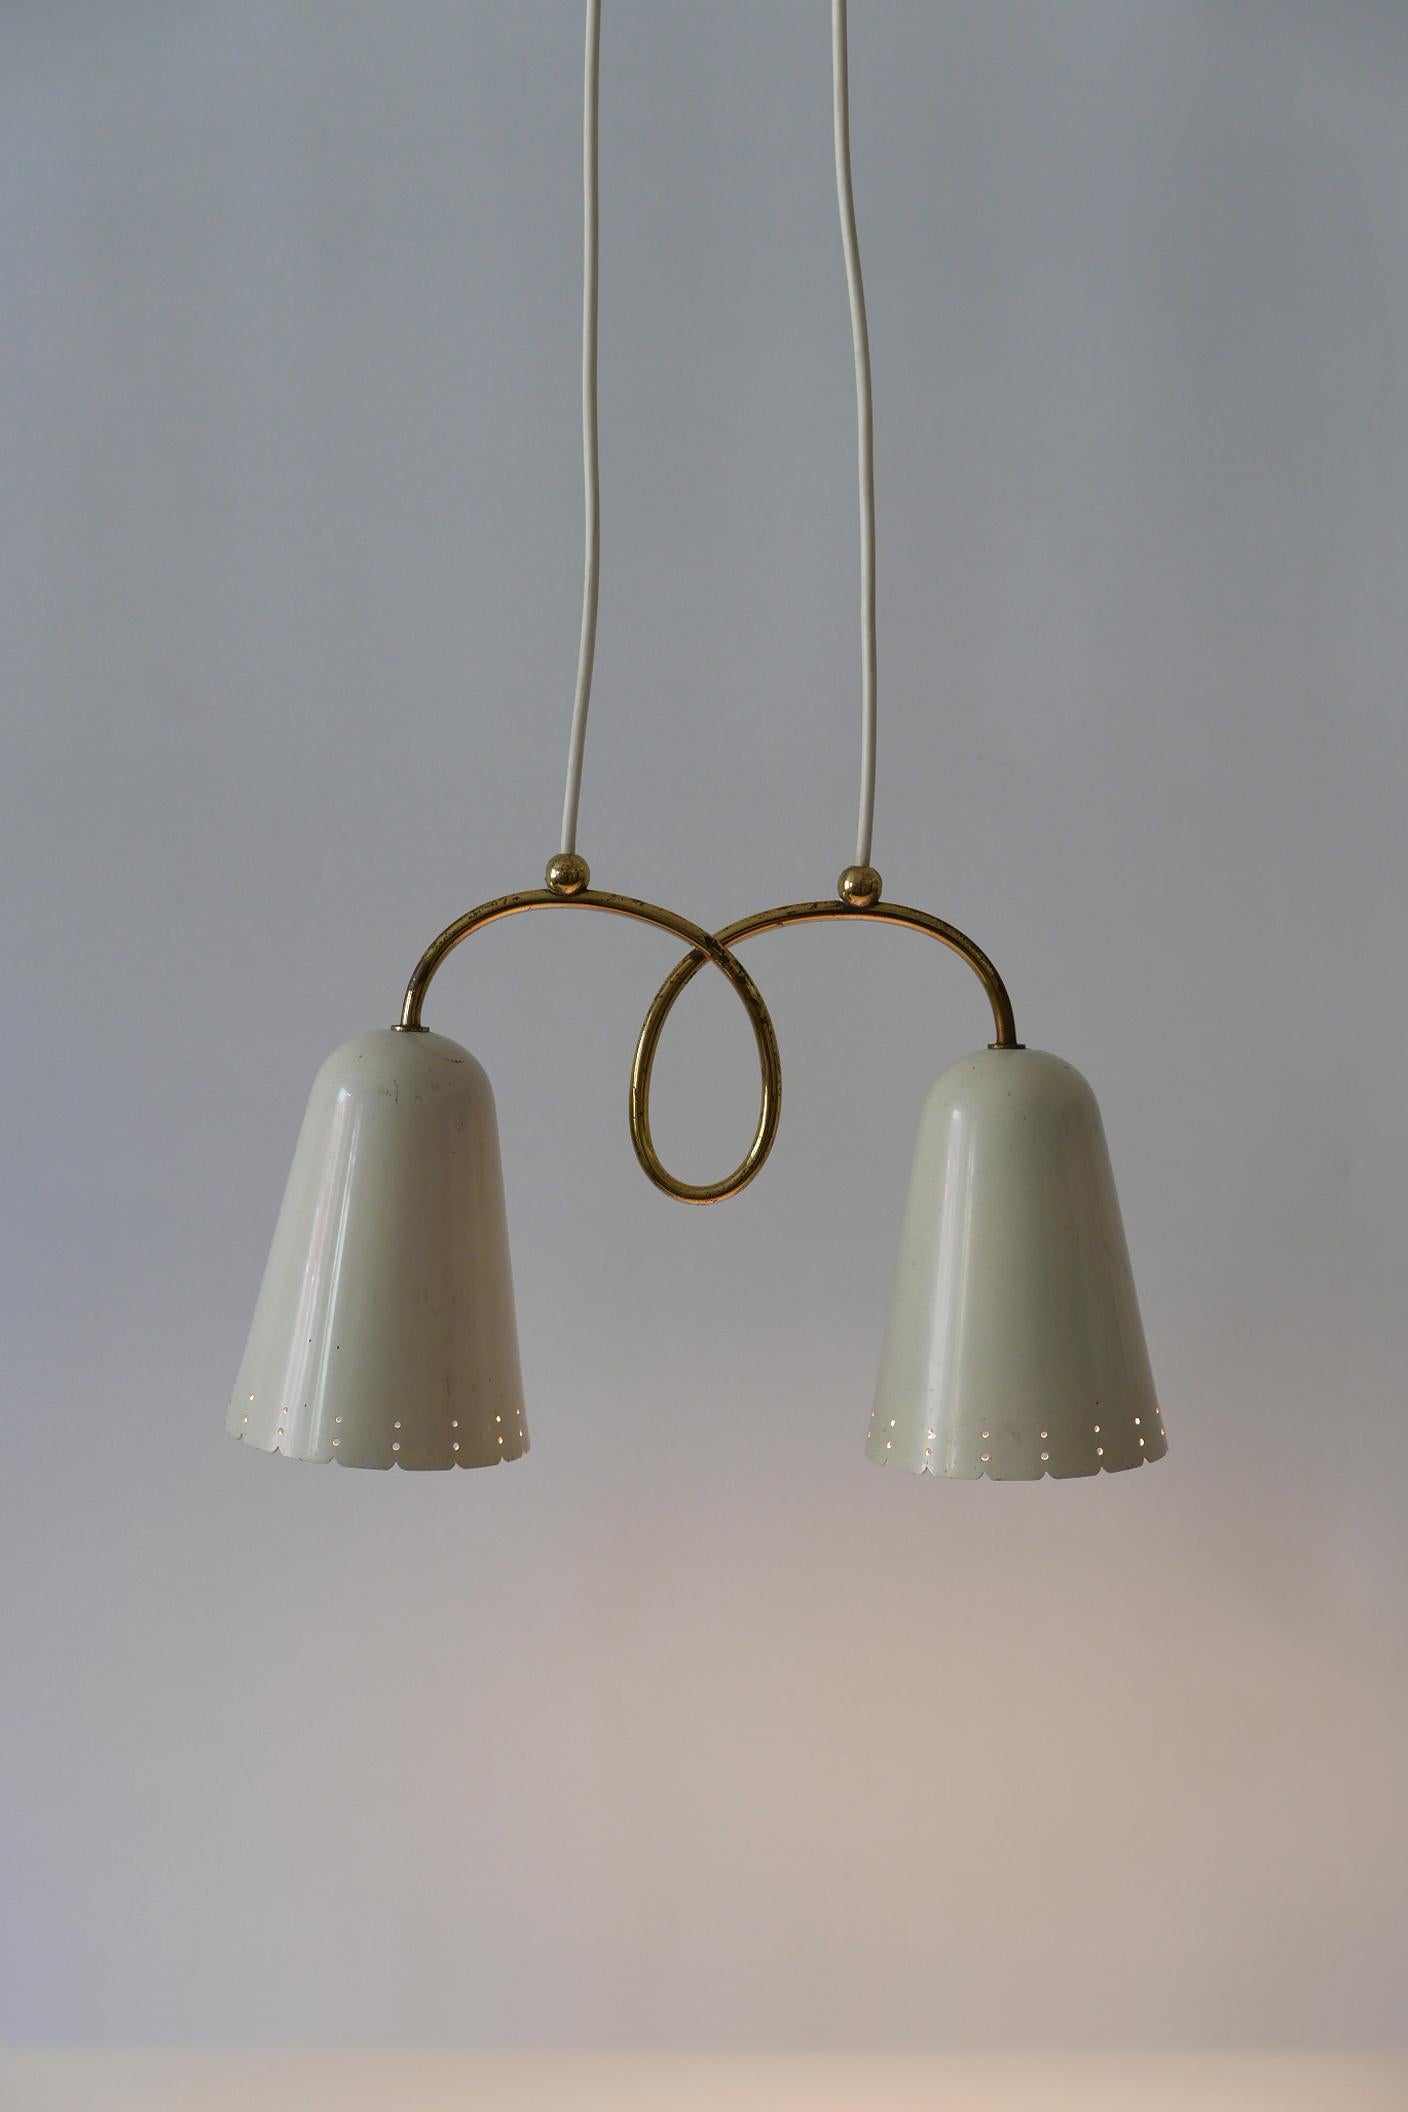 Rare Mid-Century Modern Double Head Pendant Lamp or Hanging Light 1950s, Germany 13